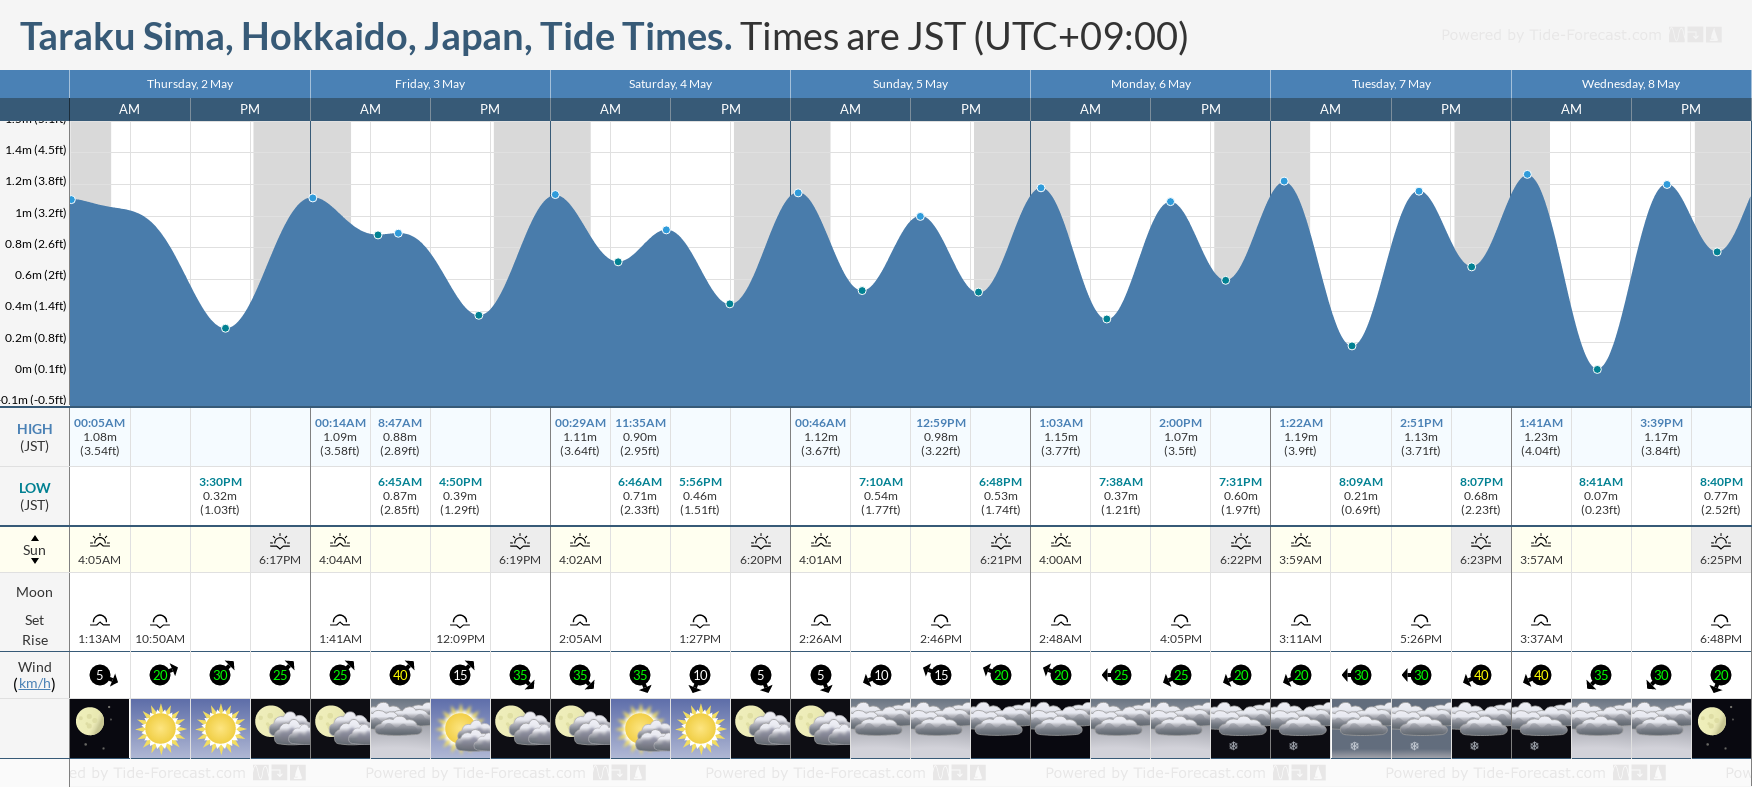 Taraku Sima, Hokkaido, Japan Tide Chart including high and low tide tide times for the next 7 days